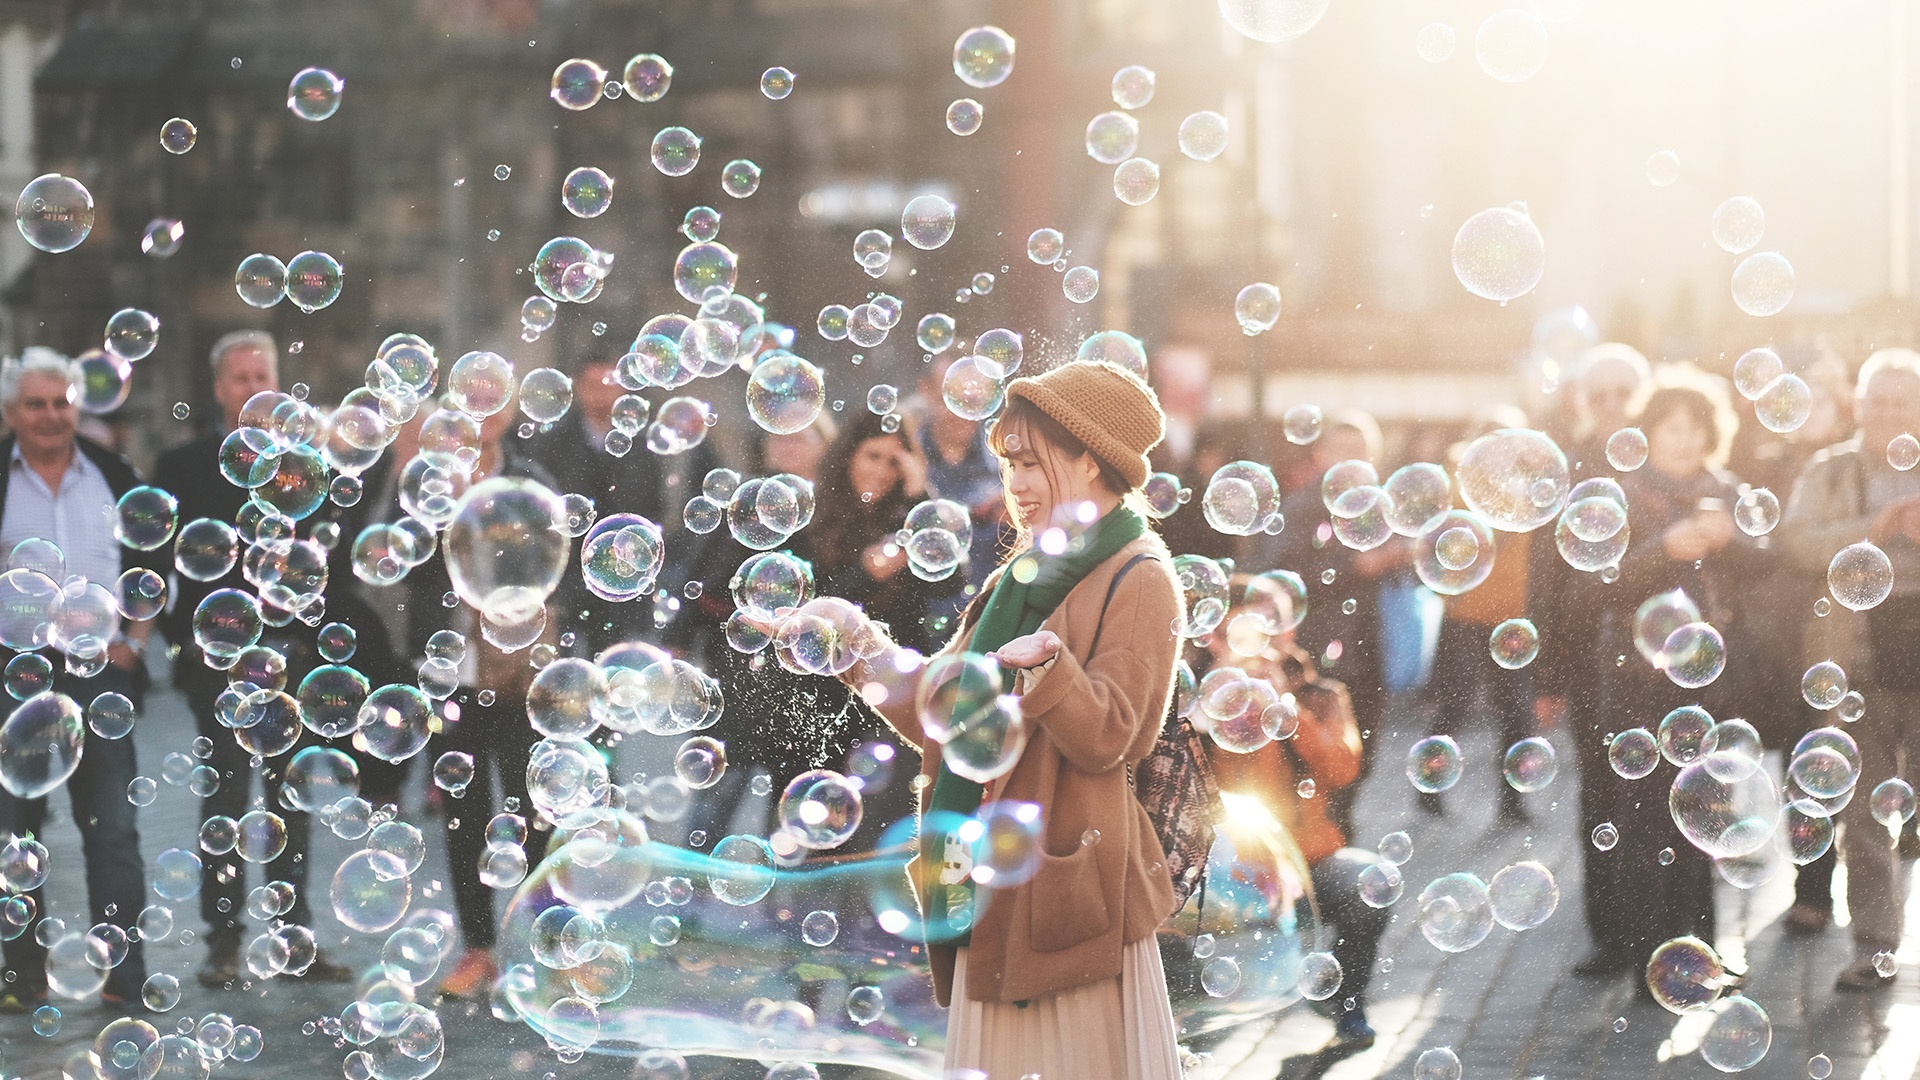 Bubble 3.0: History's Biggest Financial Bubble